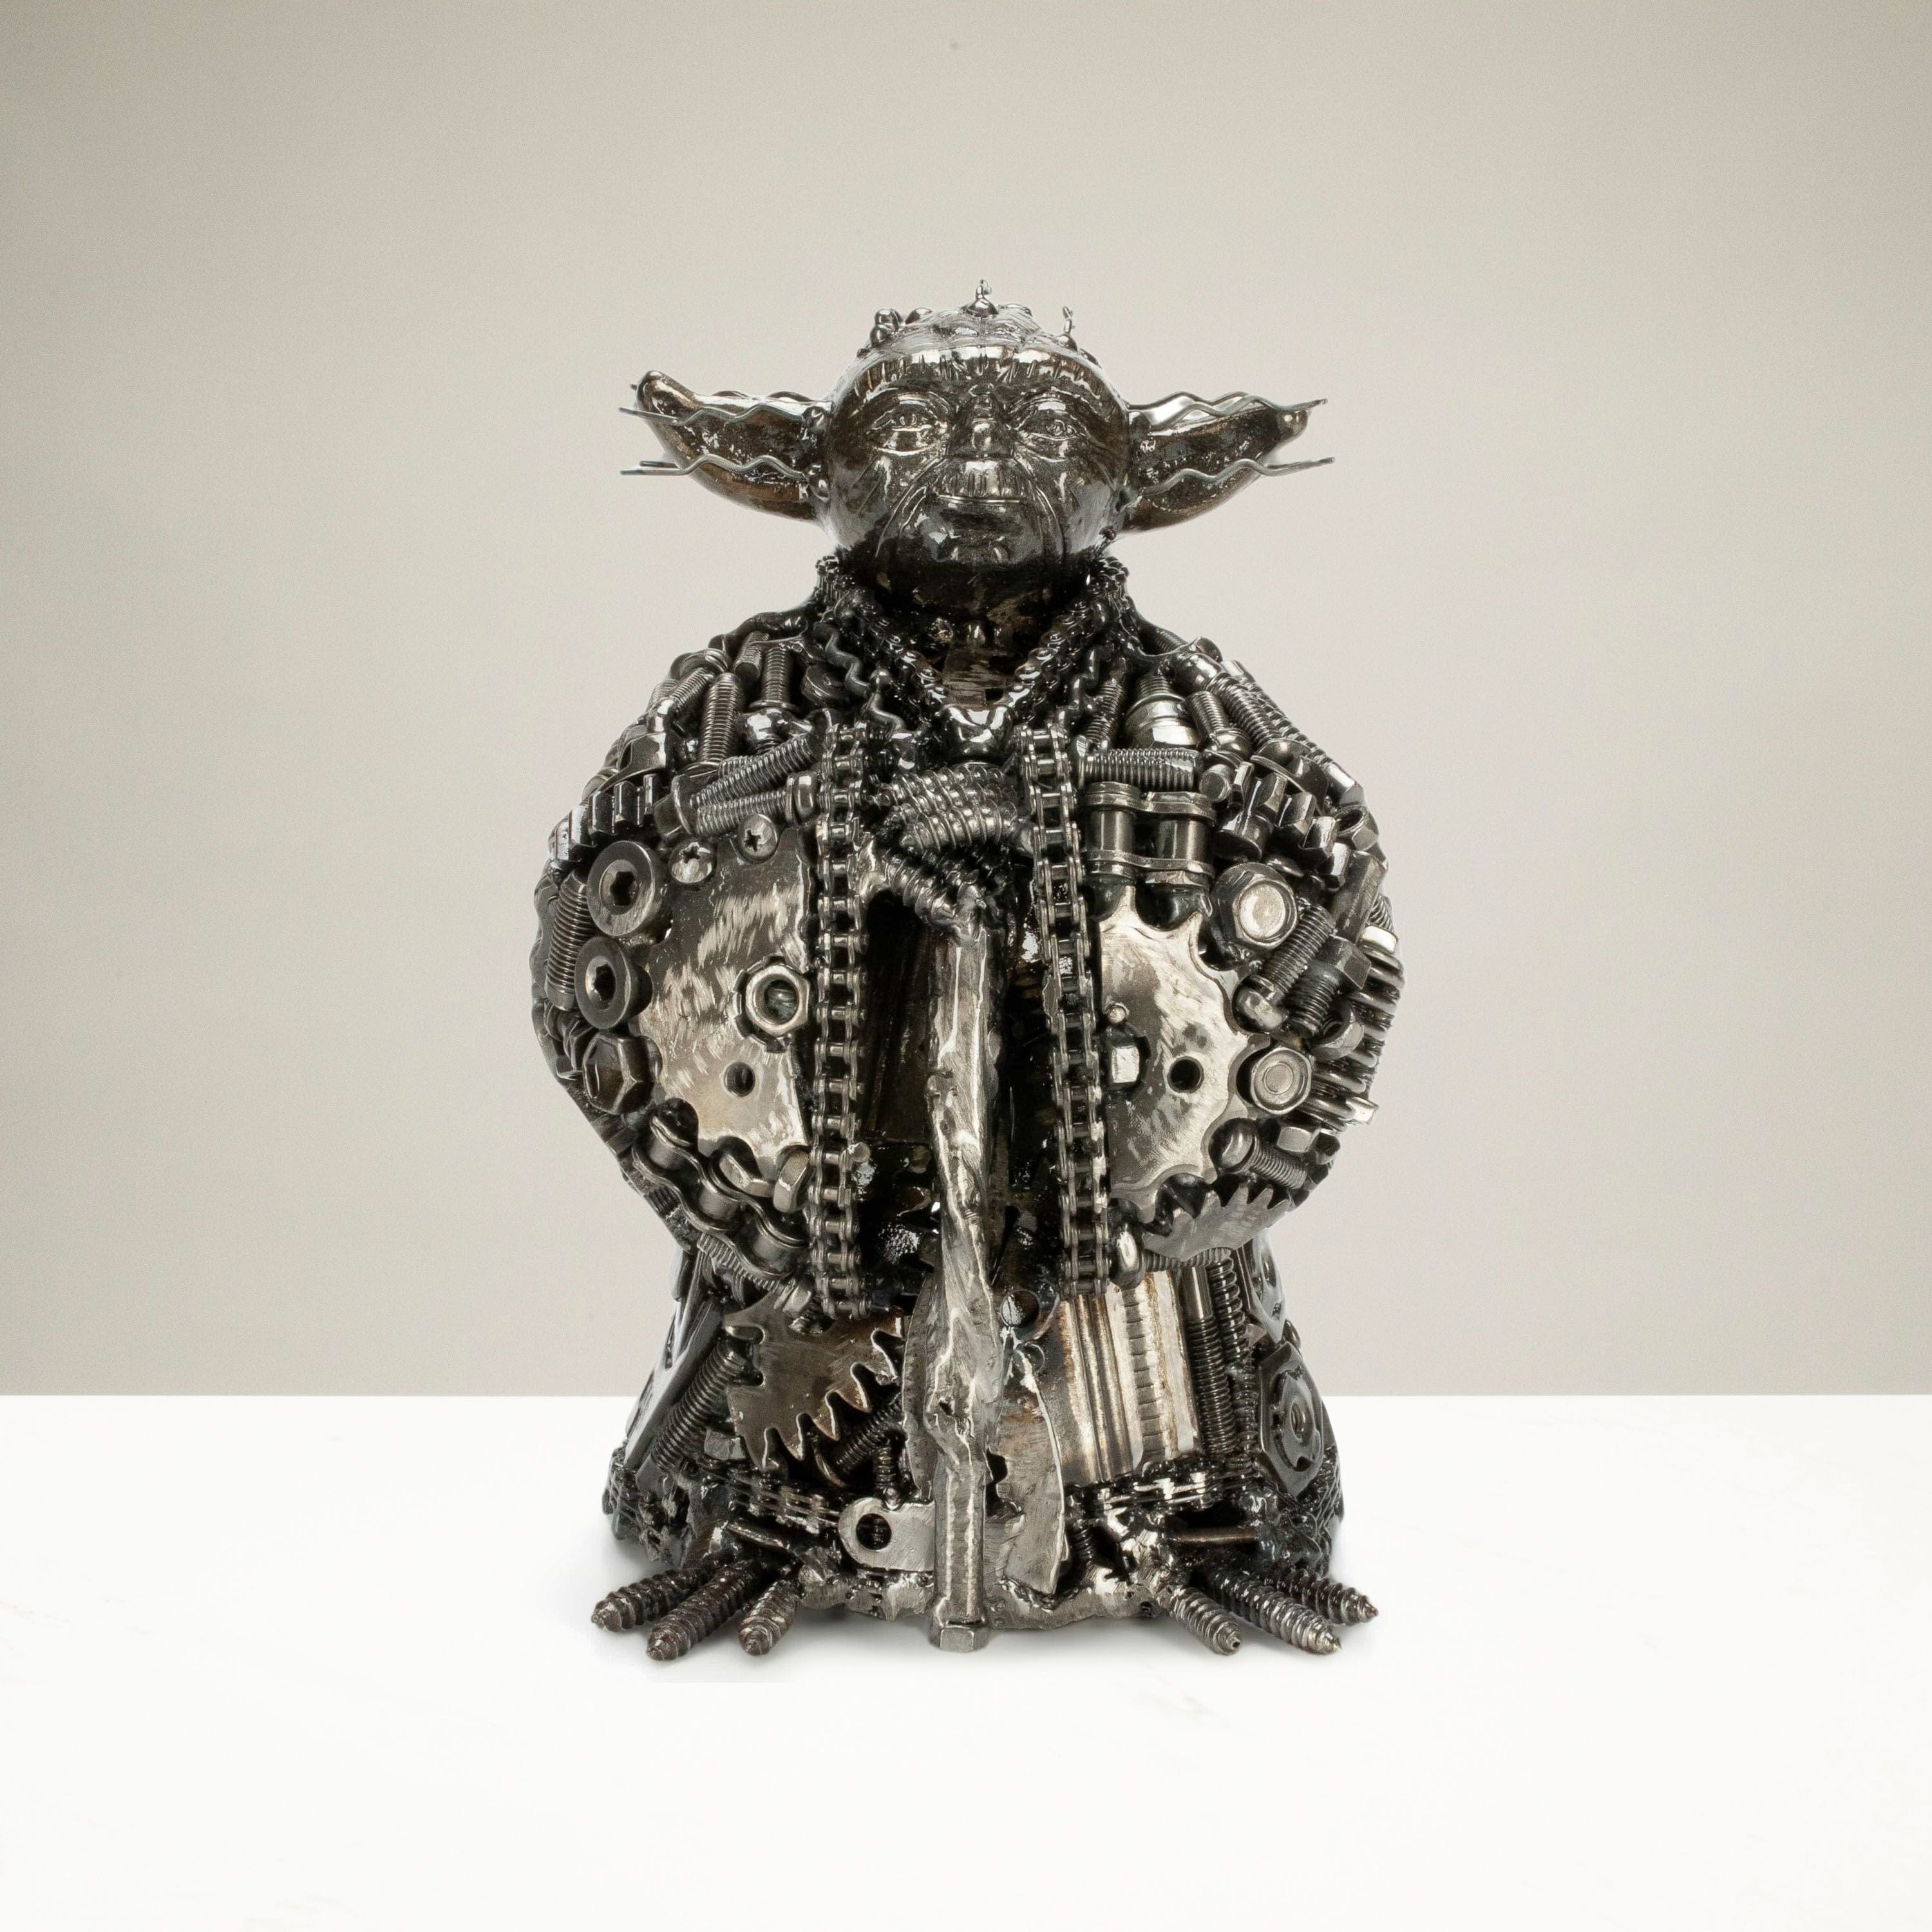 KALIFANO Recycled Metal Art Yoda Inspired Recycled Metal Art Sculpture RMS-1500Y-PK